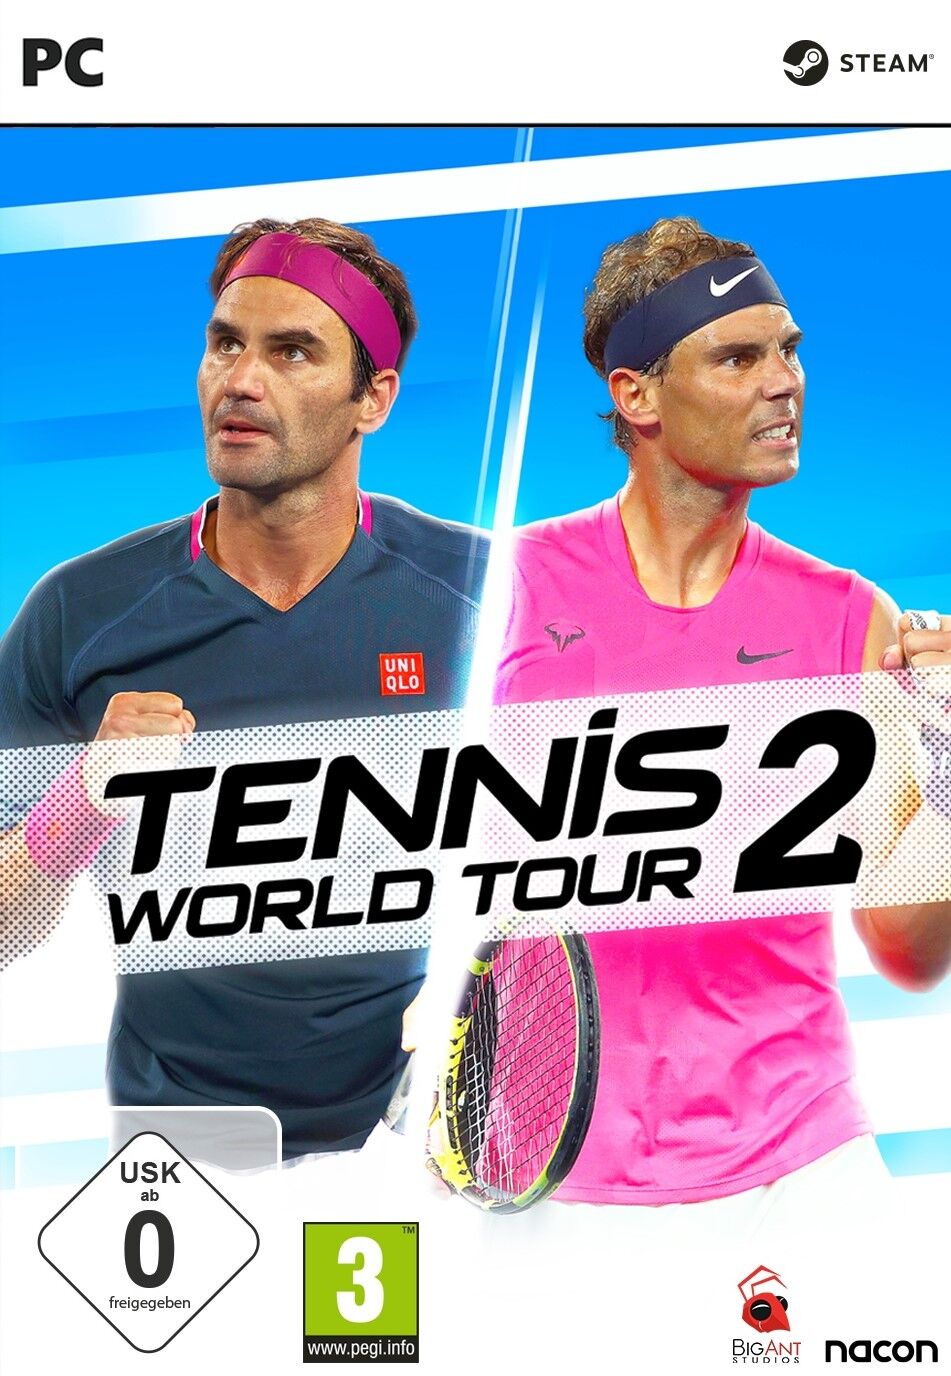 Nacon - Tennis World Tour 2 [DVD] [PC] (D/F)